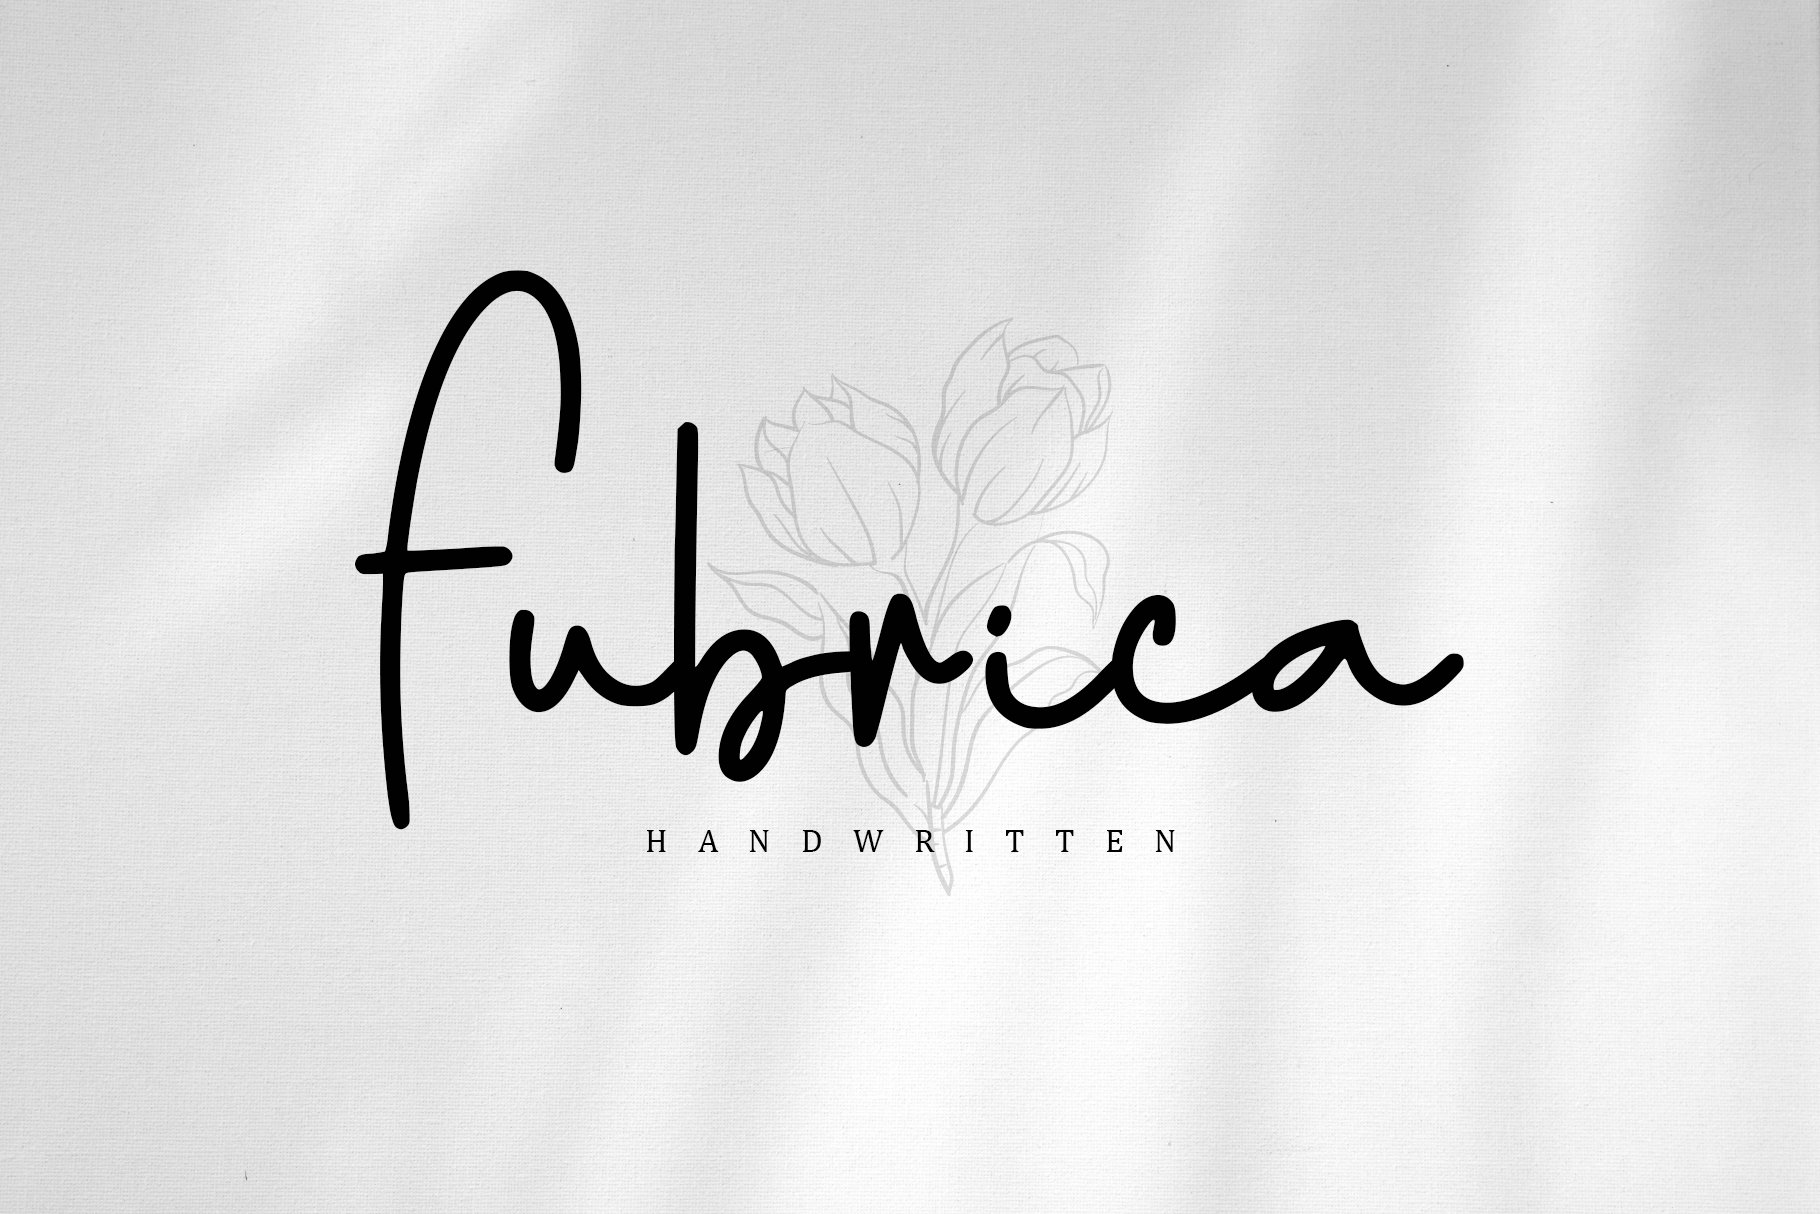 Fubrica - Personal Use